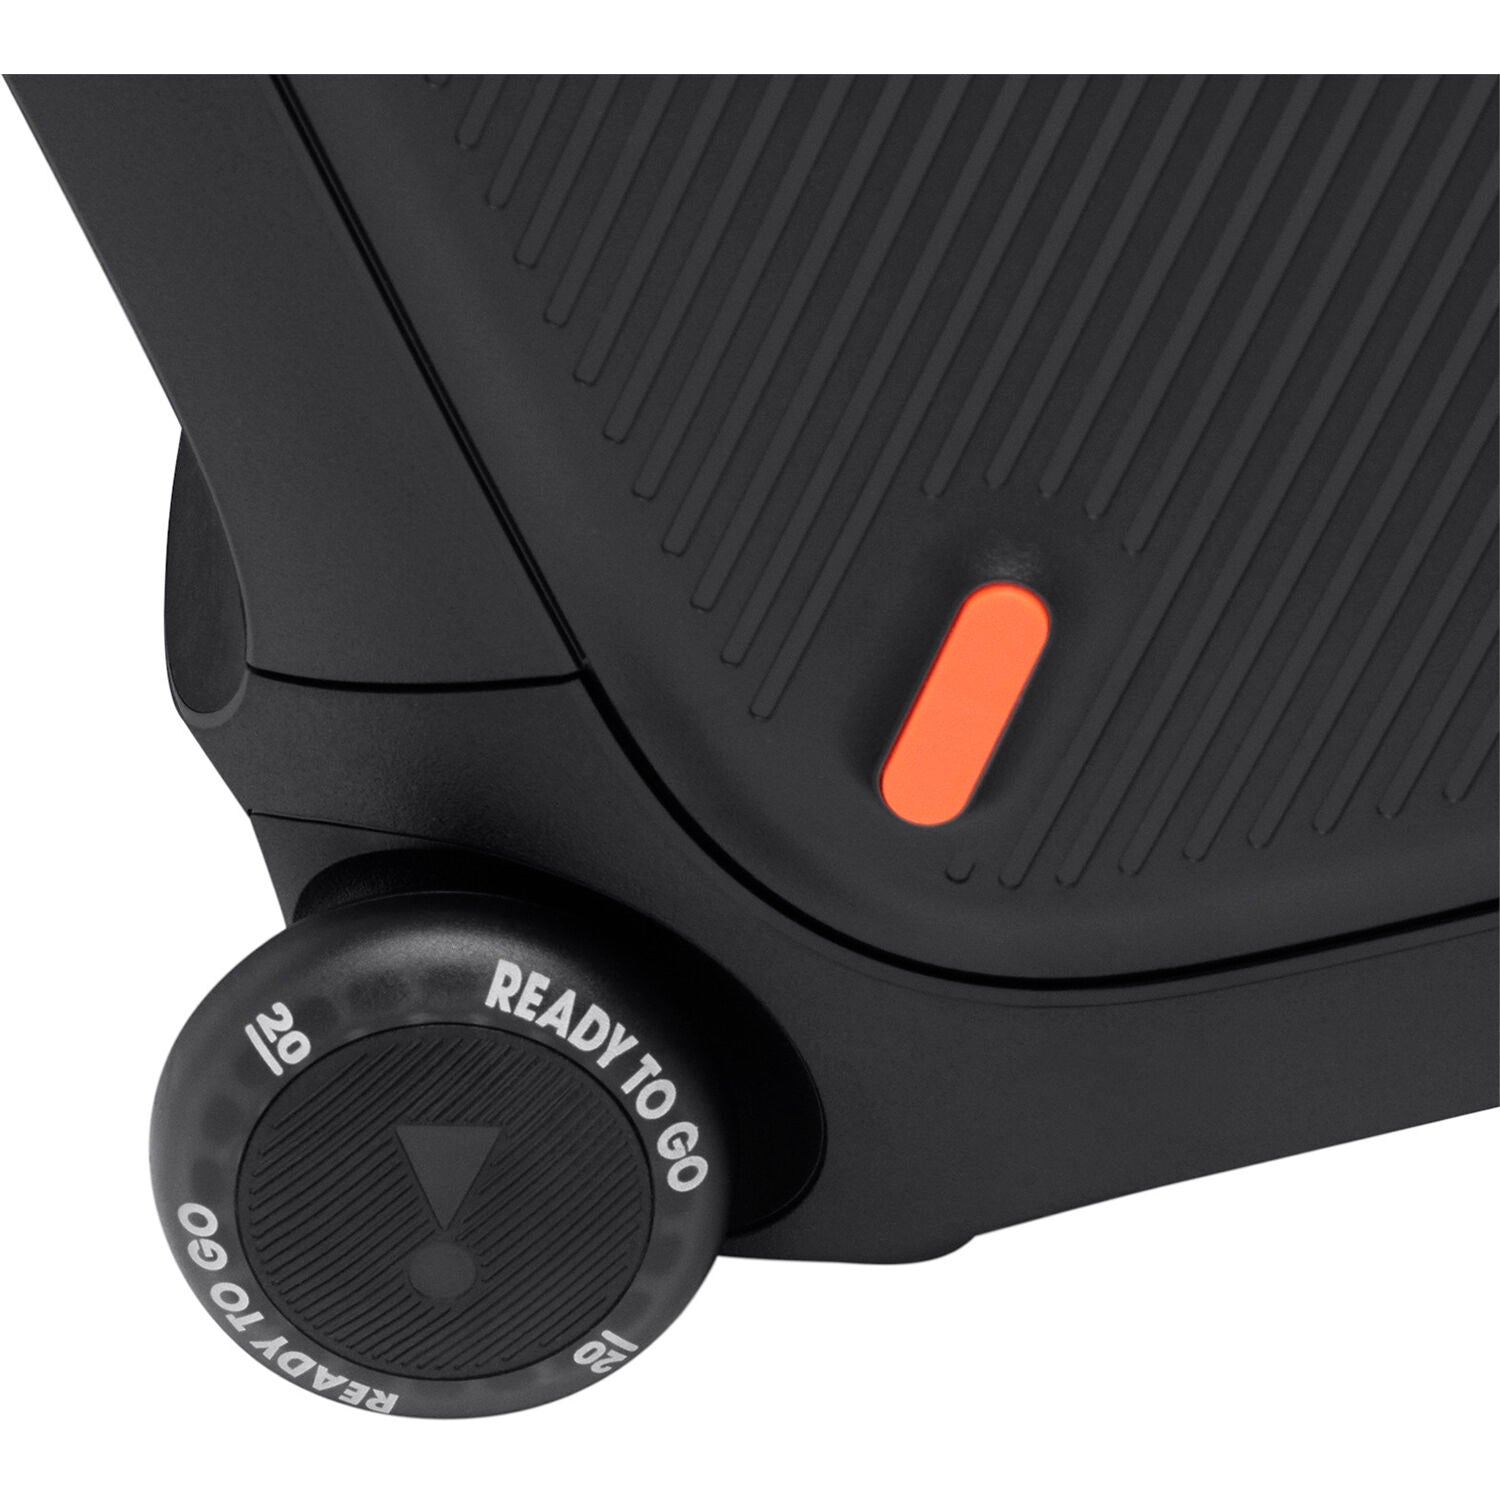 JBL JBLPARTYBOX310AM-Z PartyBox 310 Portable Bluetooth Wireless Speaker - Certified Refurbished